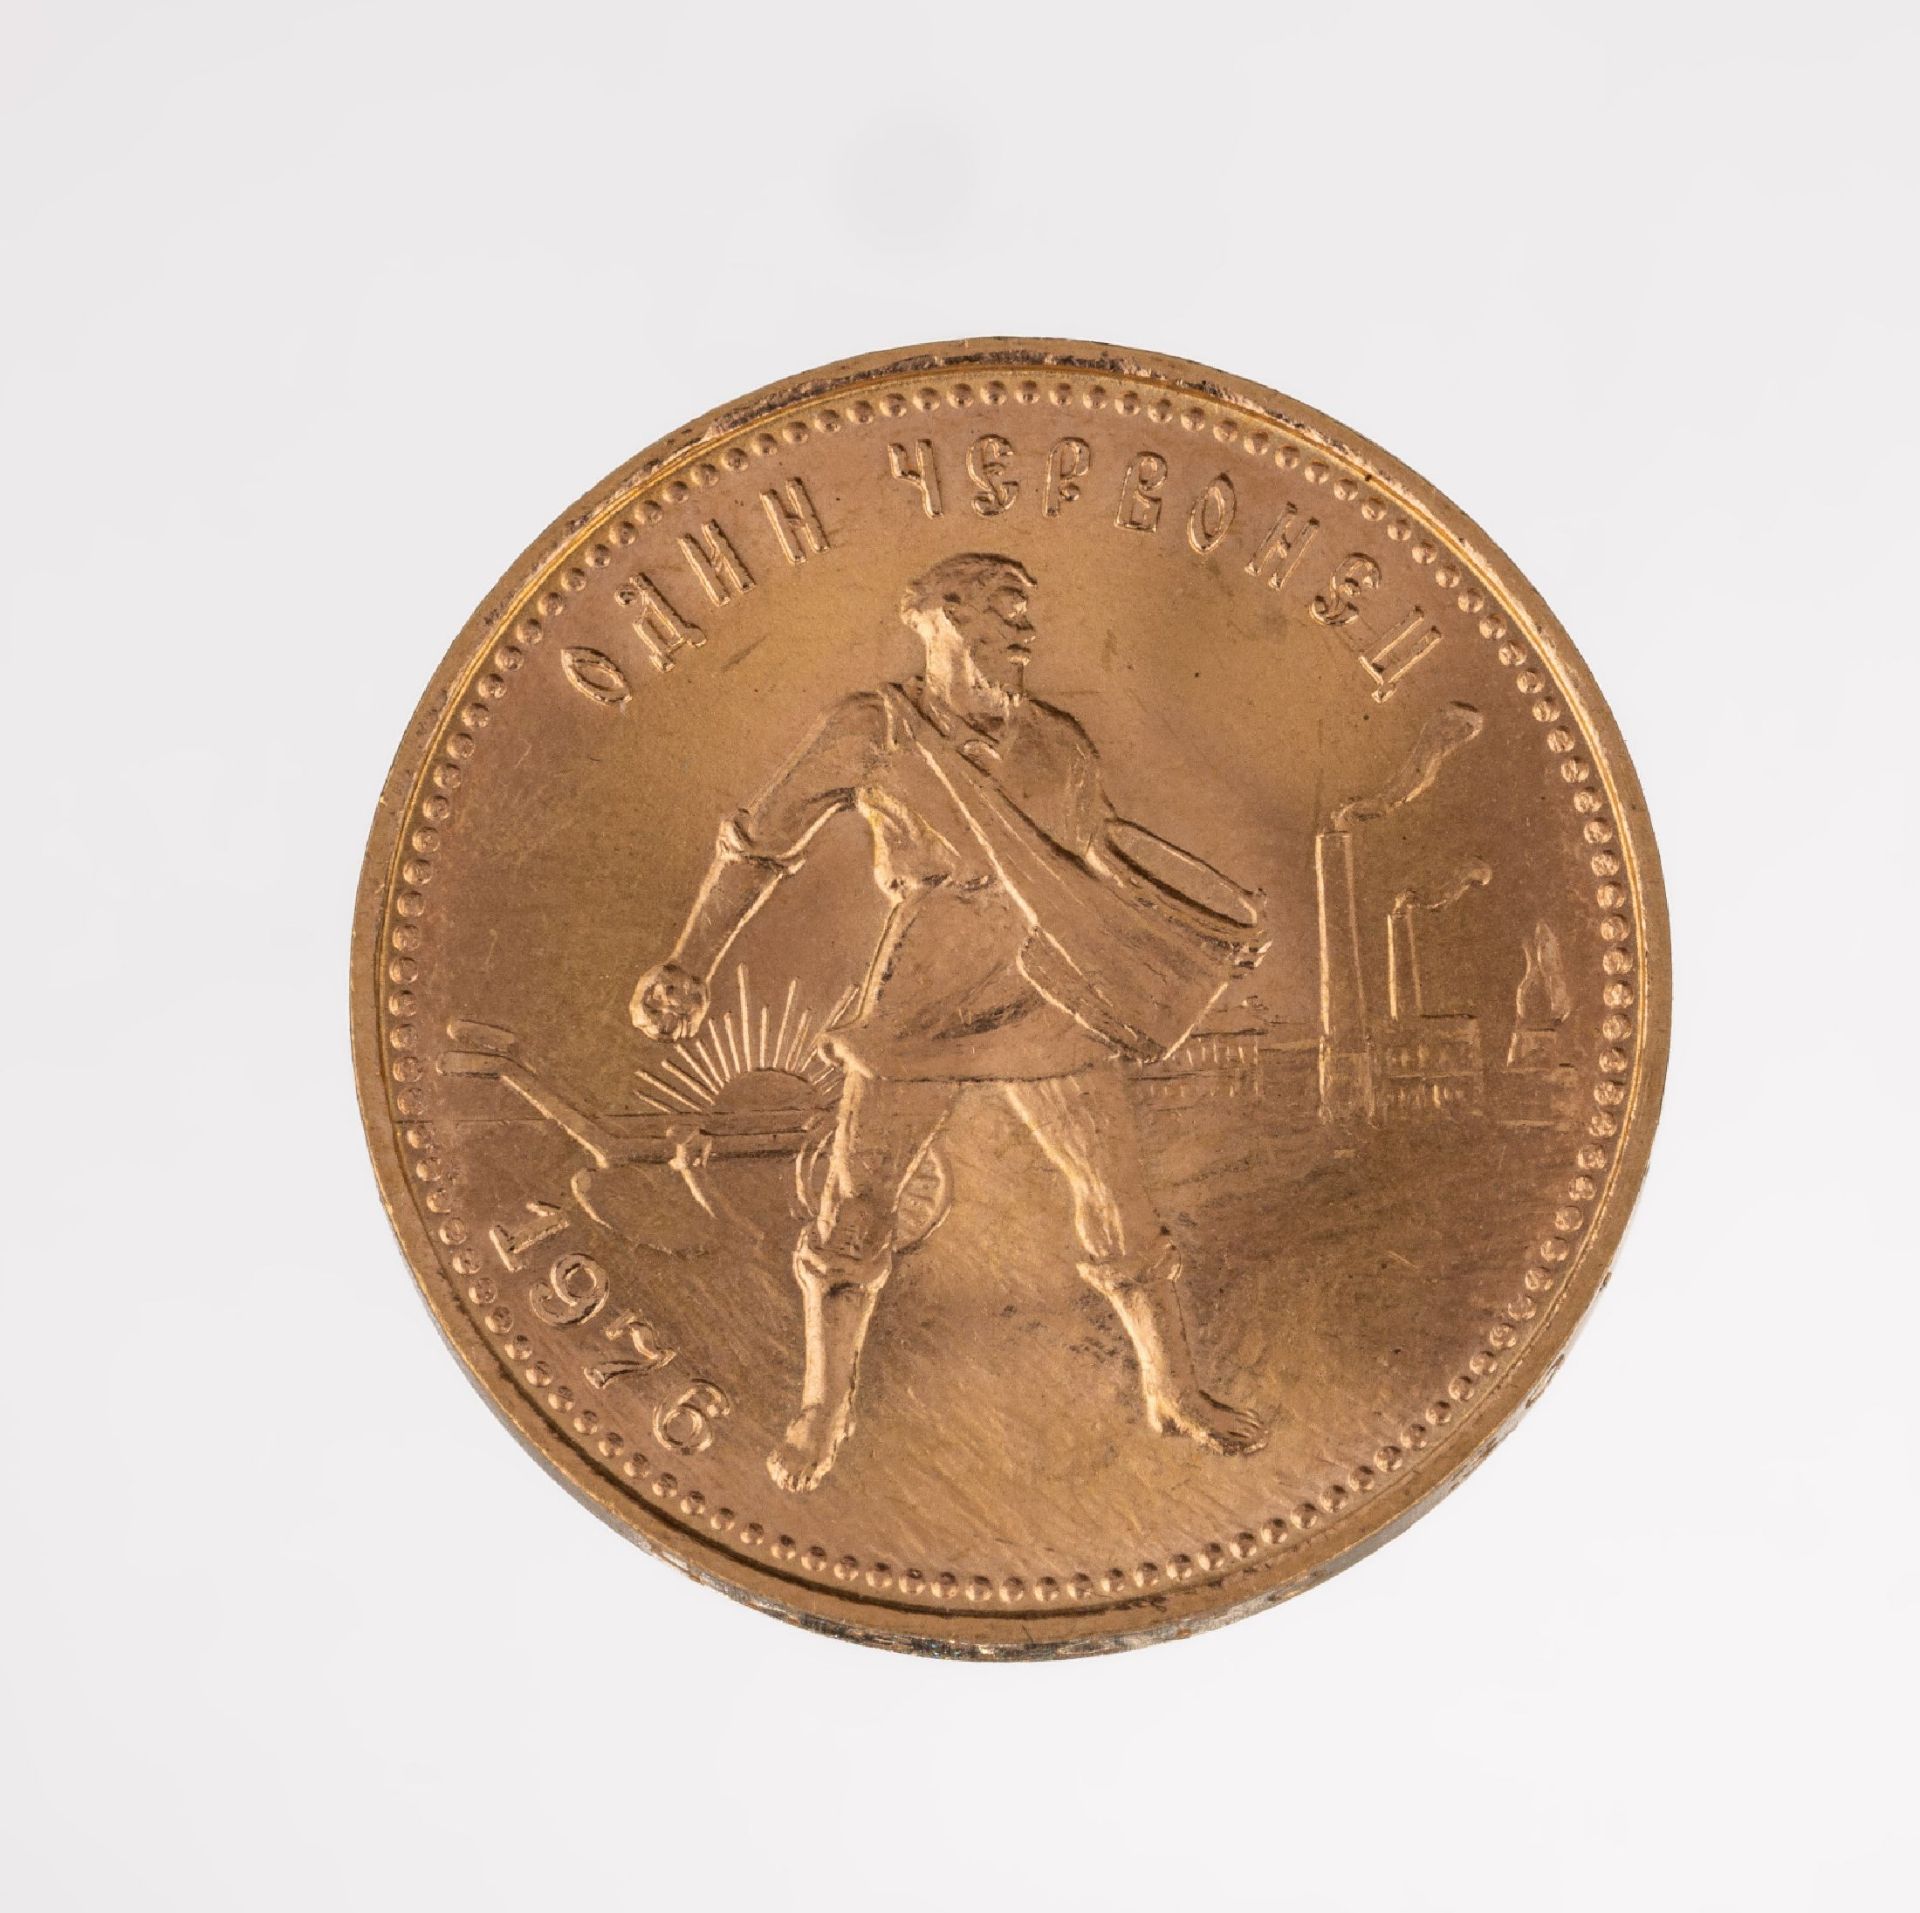 Goldmünze 10 Rubel, Russland, 1976, 1